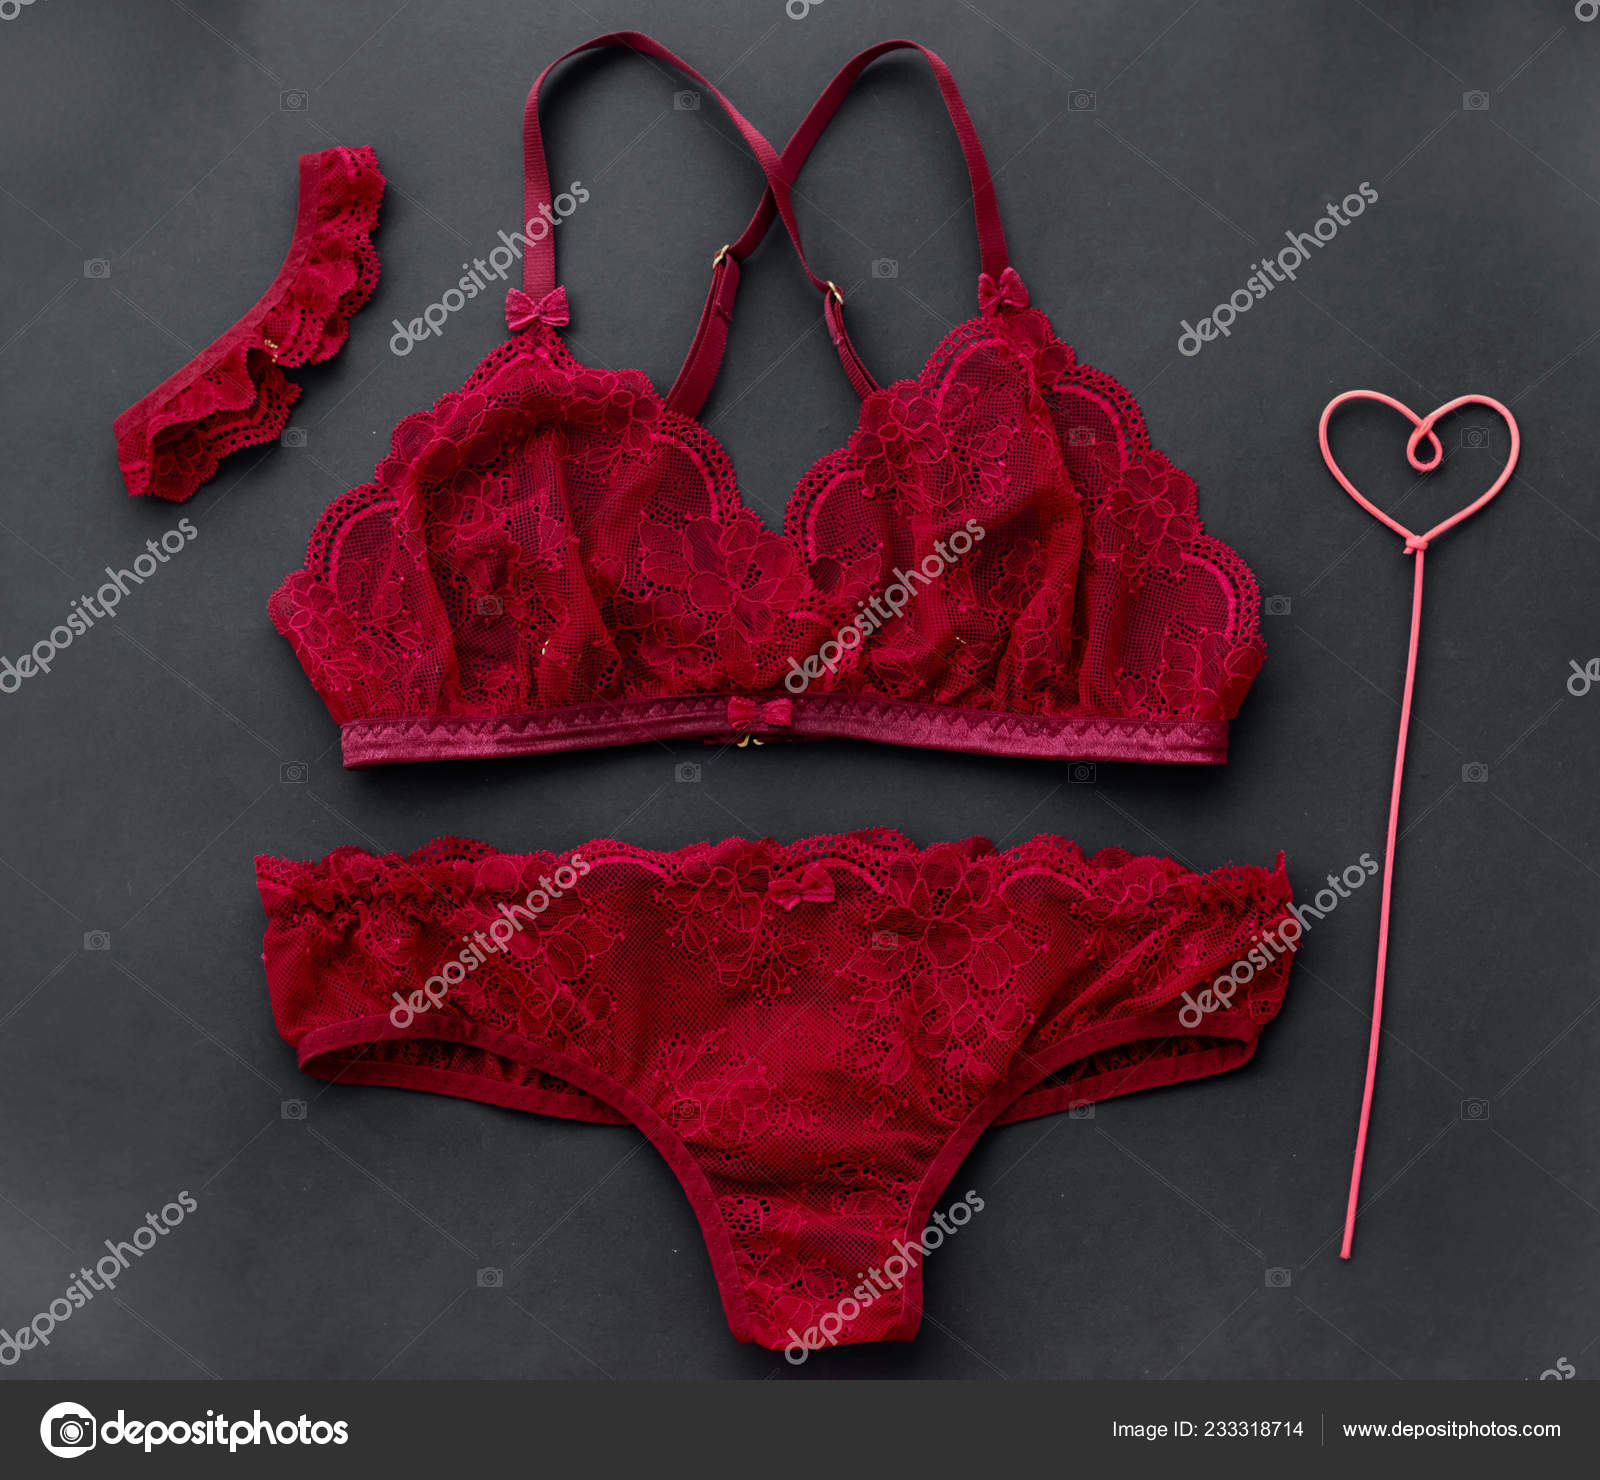 Red Lace Underwear Gift Girl Valentine's Day Stock Photo by ©greenoline  233318714